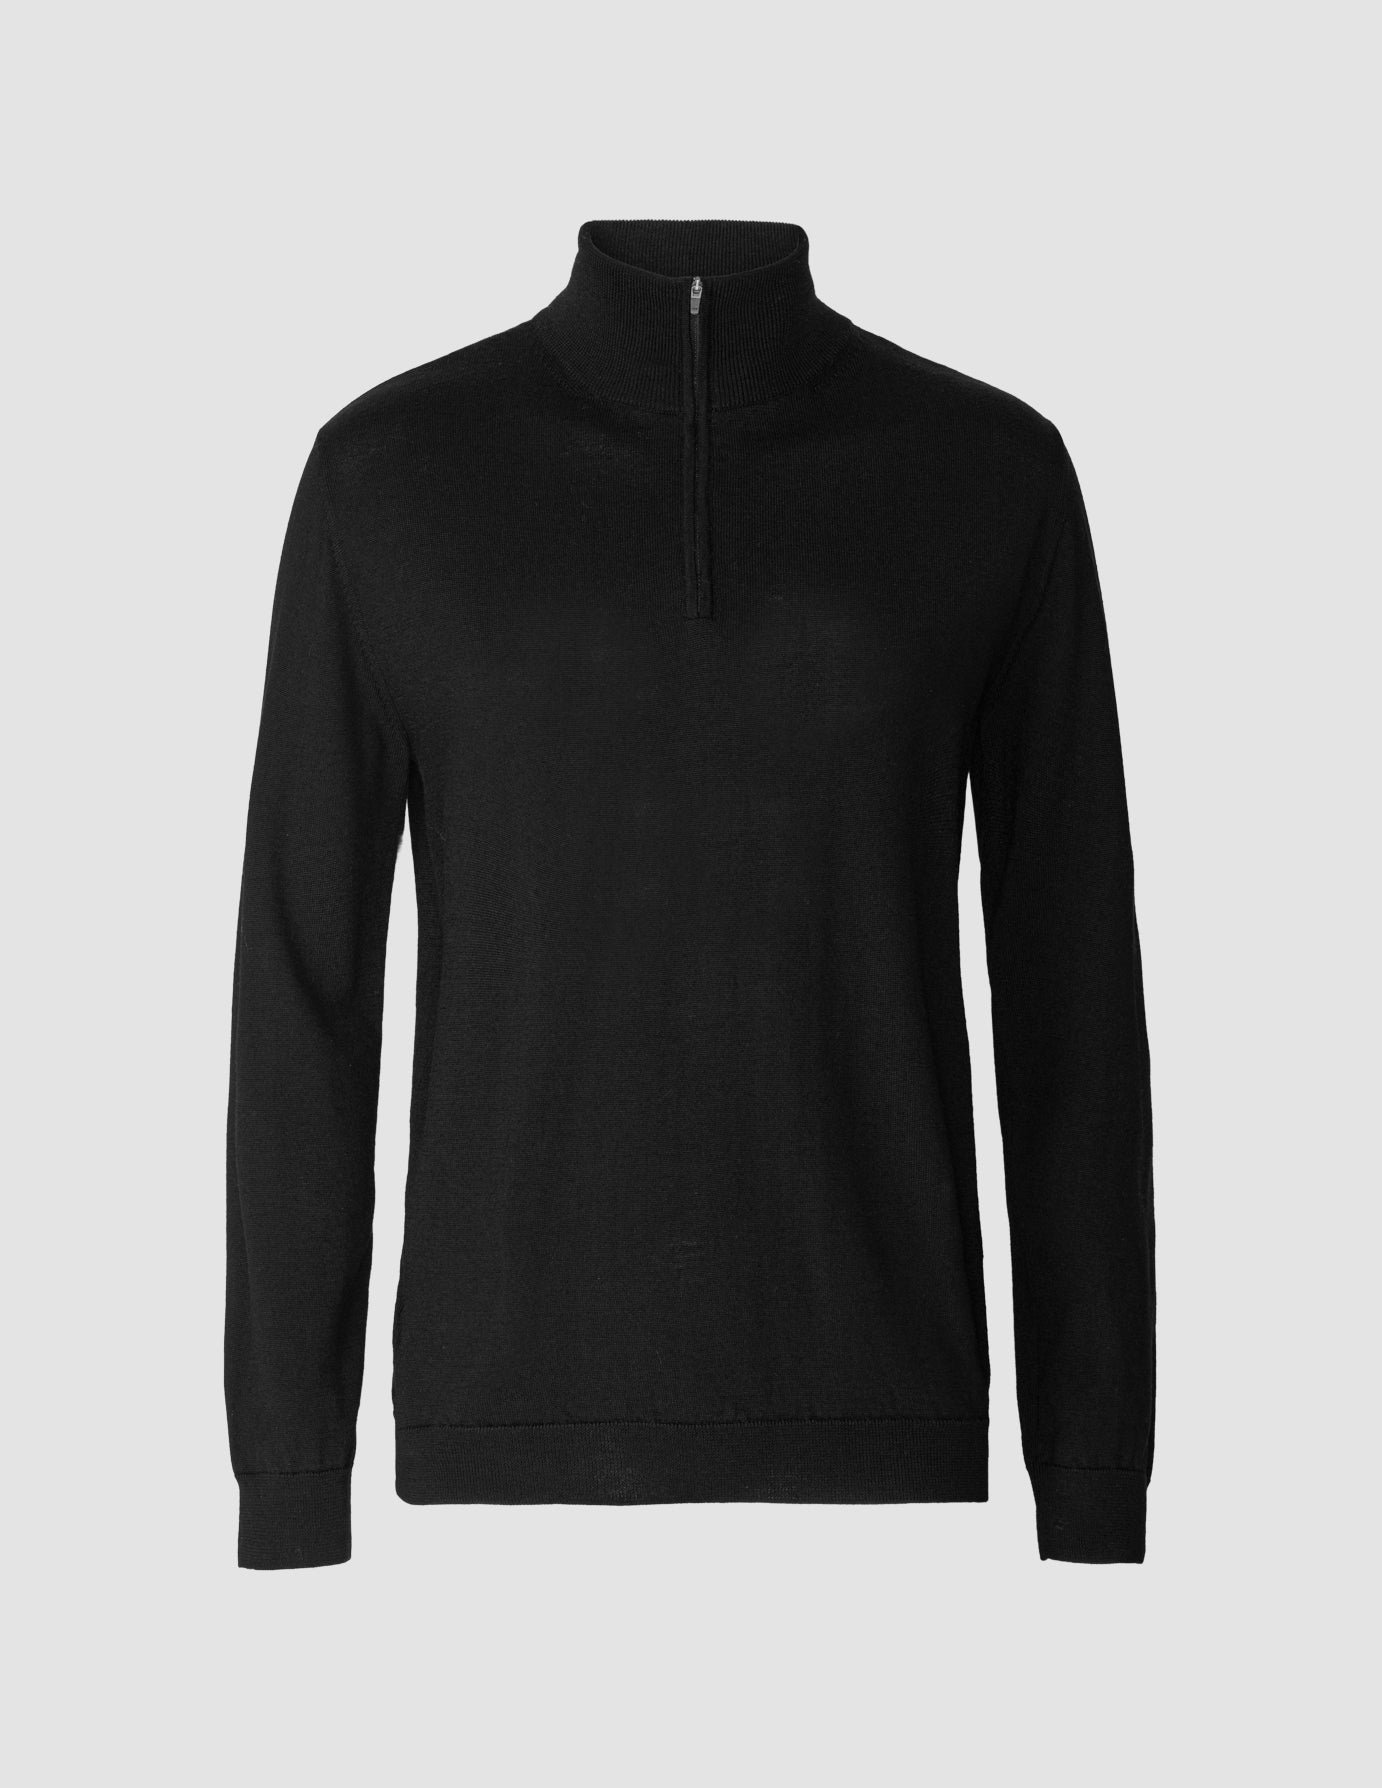 Black Merino Half Zip Sweater